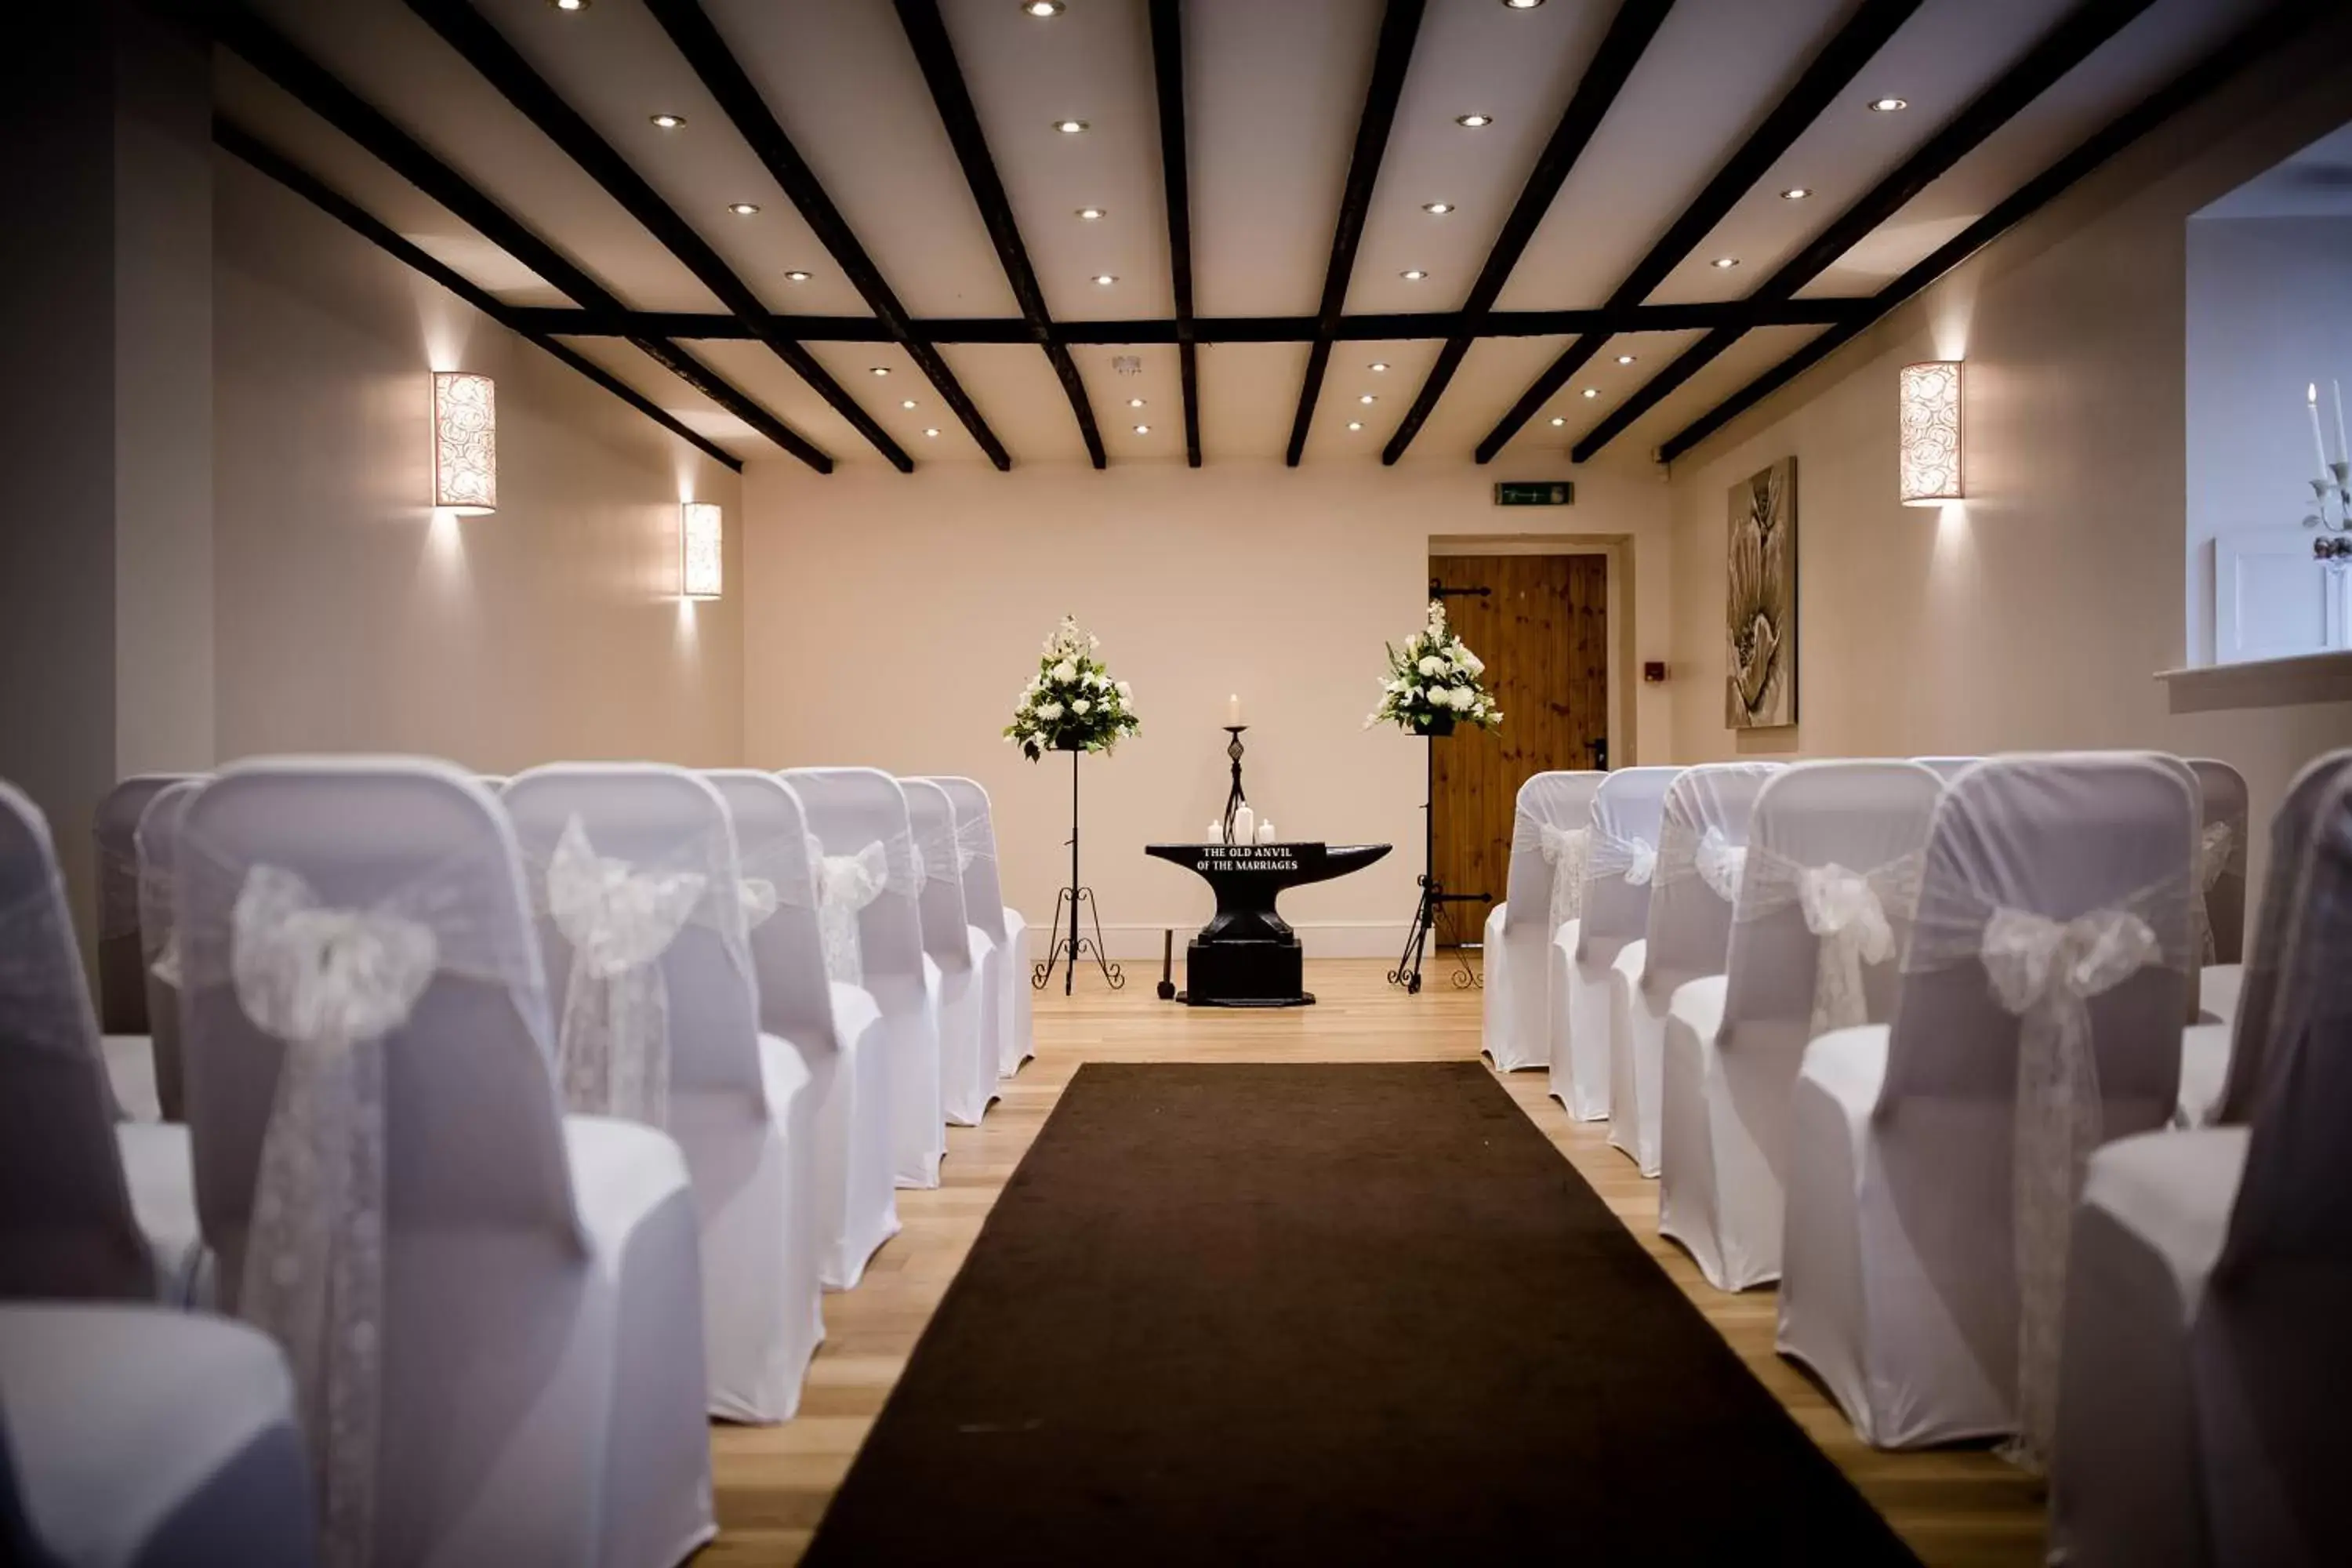 Banquet/Function facilities, Banquet Facilities in Gretna Hall Hotel